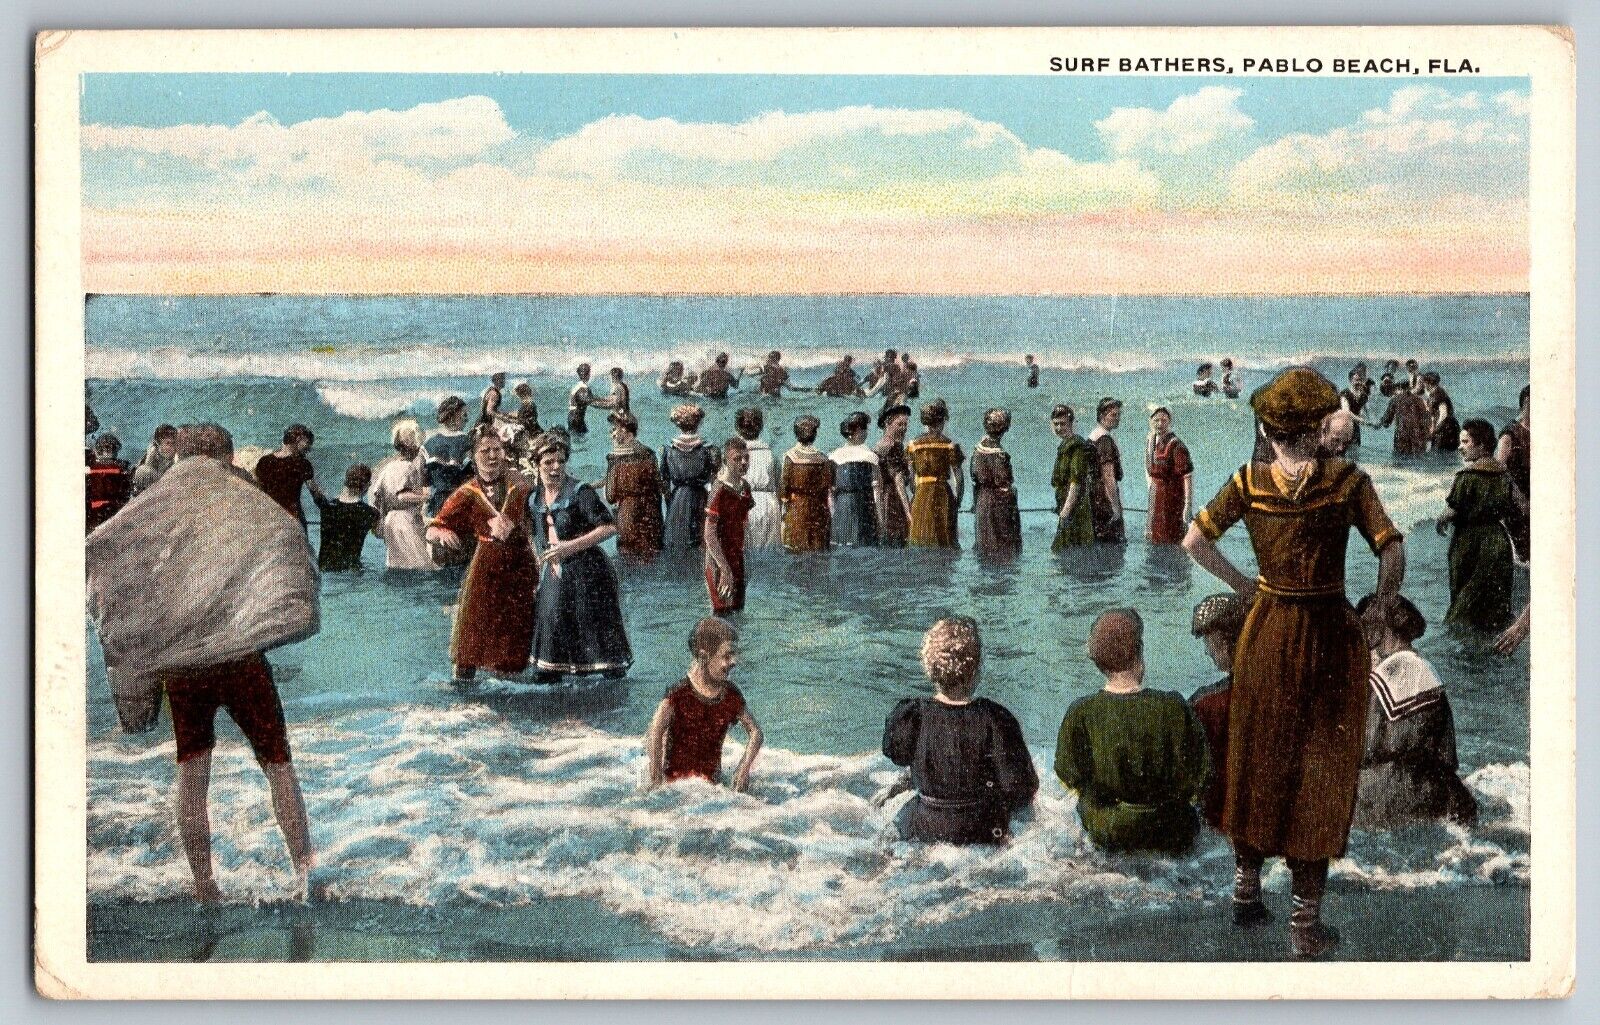 Pablo Beach, Florida FL - Surf Bathers - Vintage Postcard - Unposted